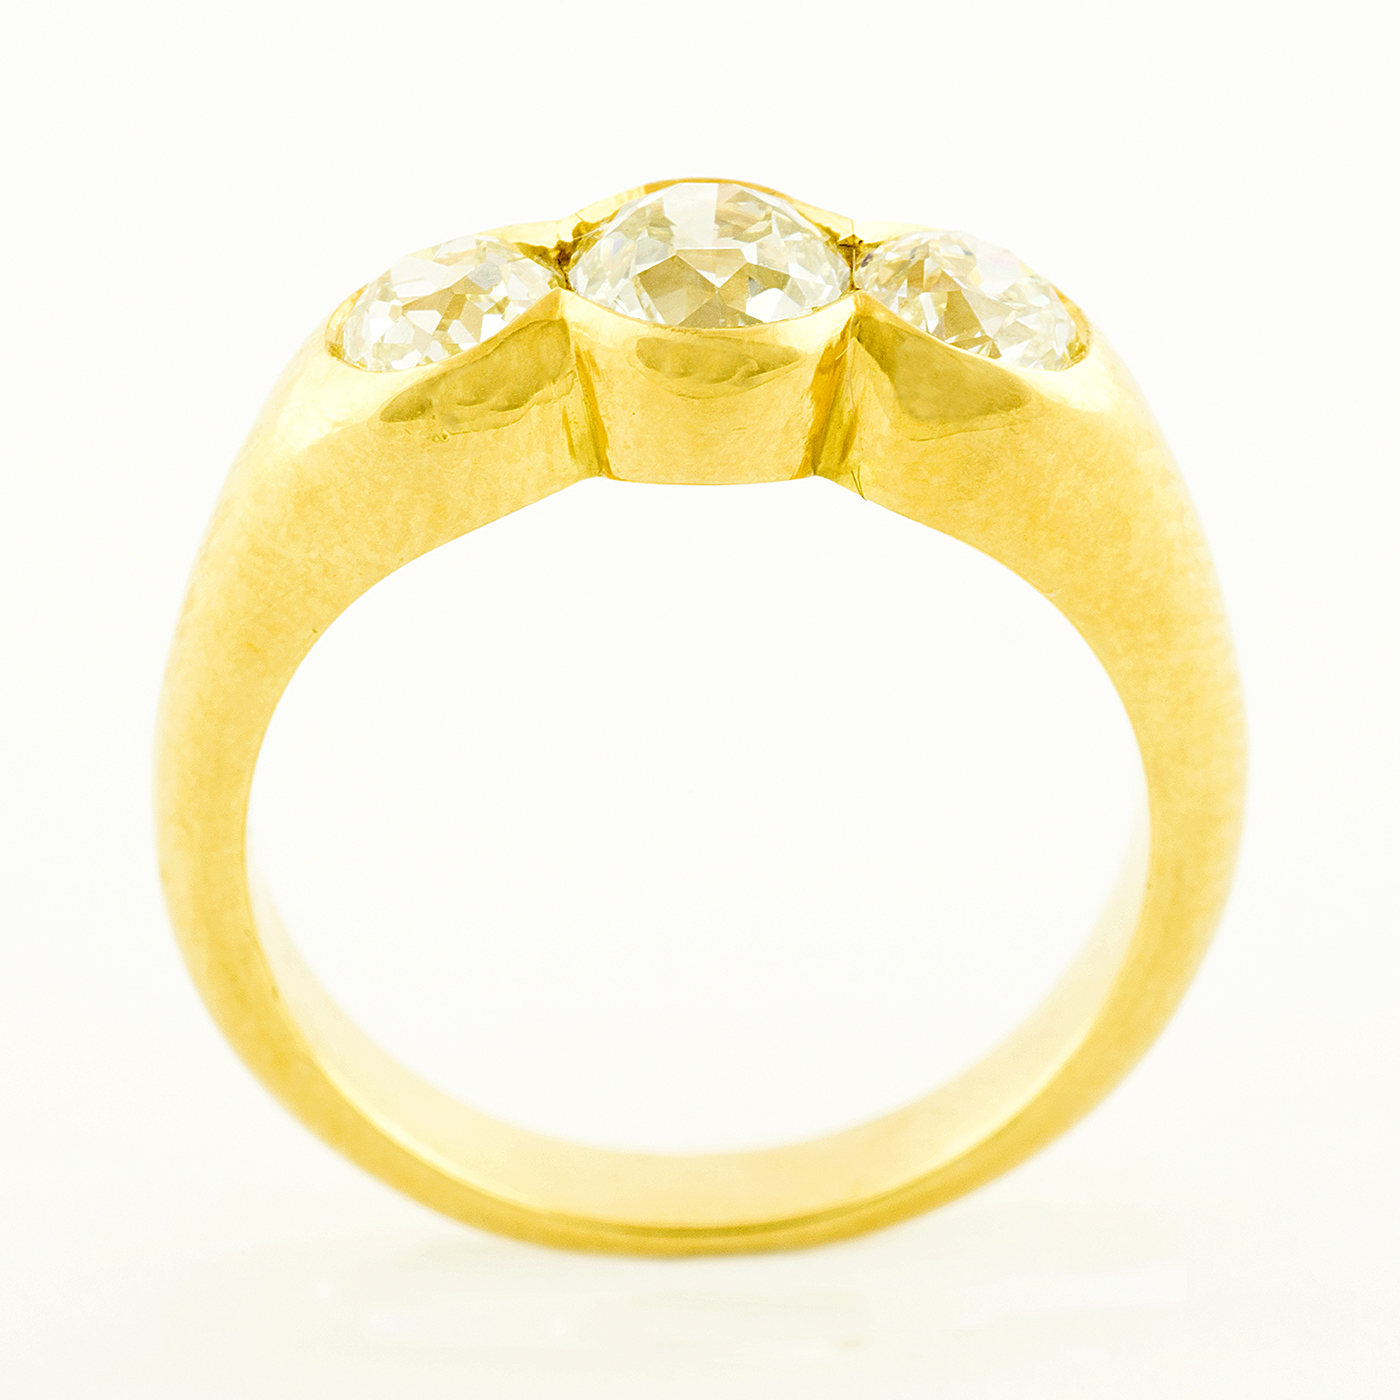 Sortija en Oro de 18k con tres Diamantes Naturales, talla Antigua Europea, de 1,30 ct. total (O-R/VS2-IF-VVS2). Certificado IGE.